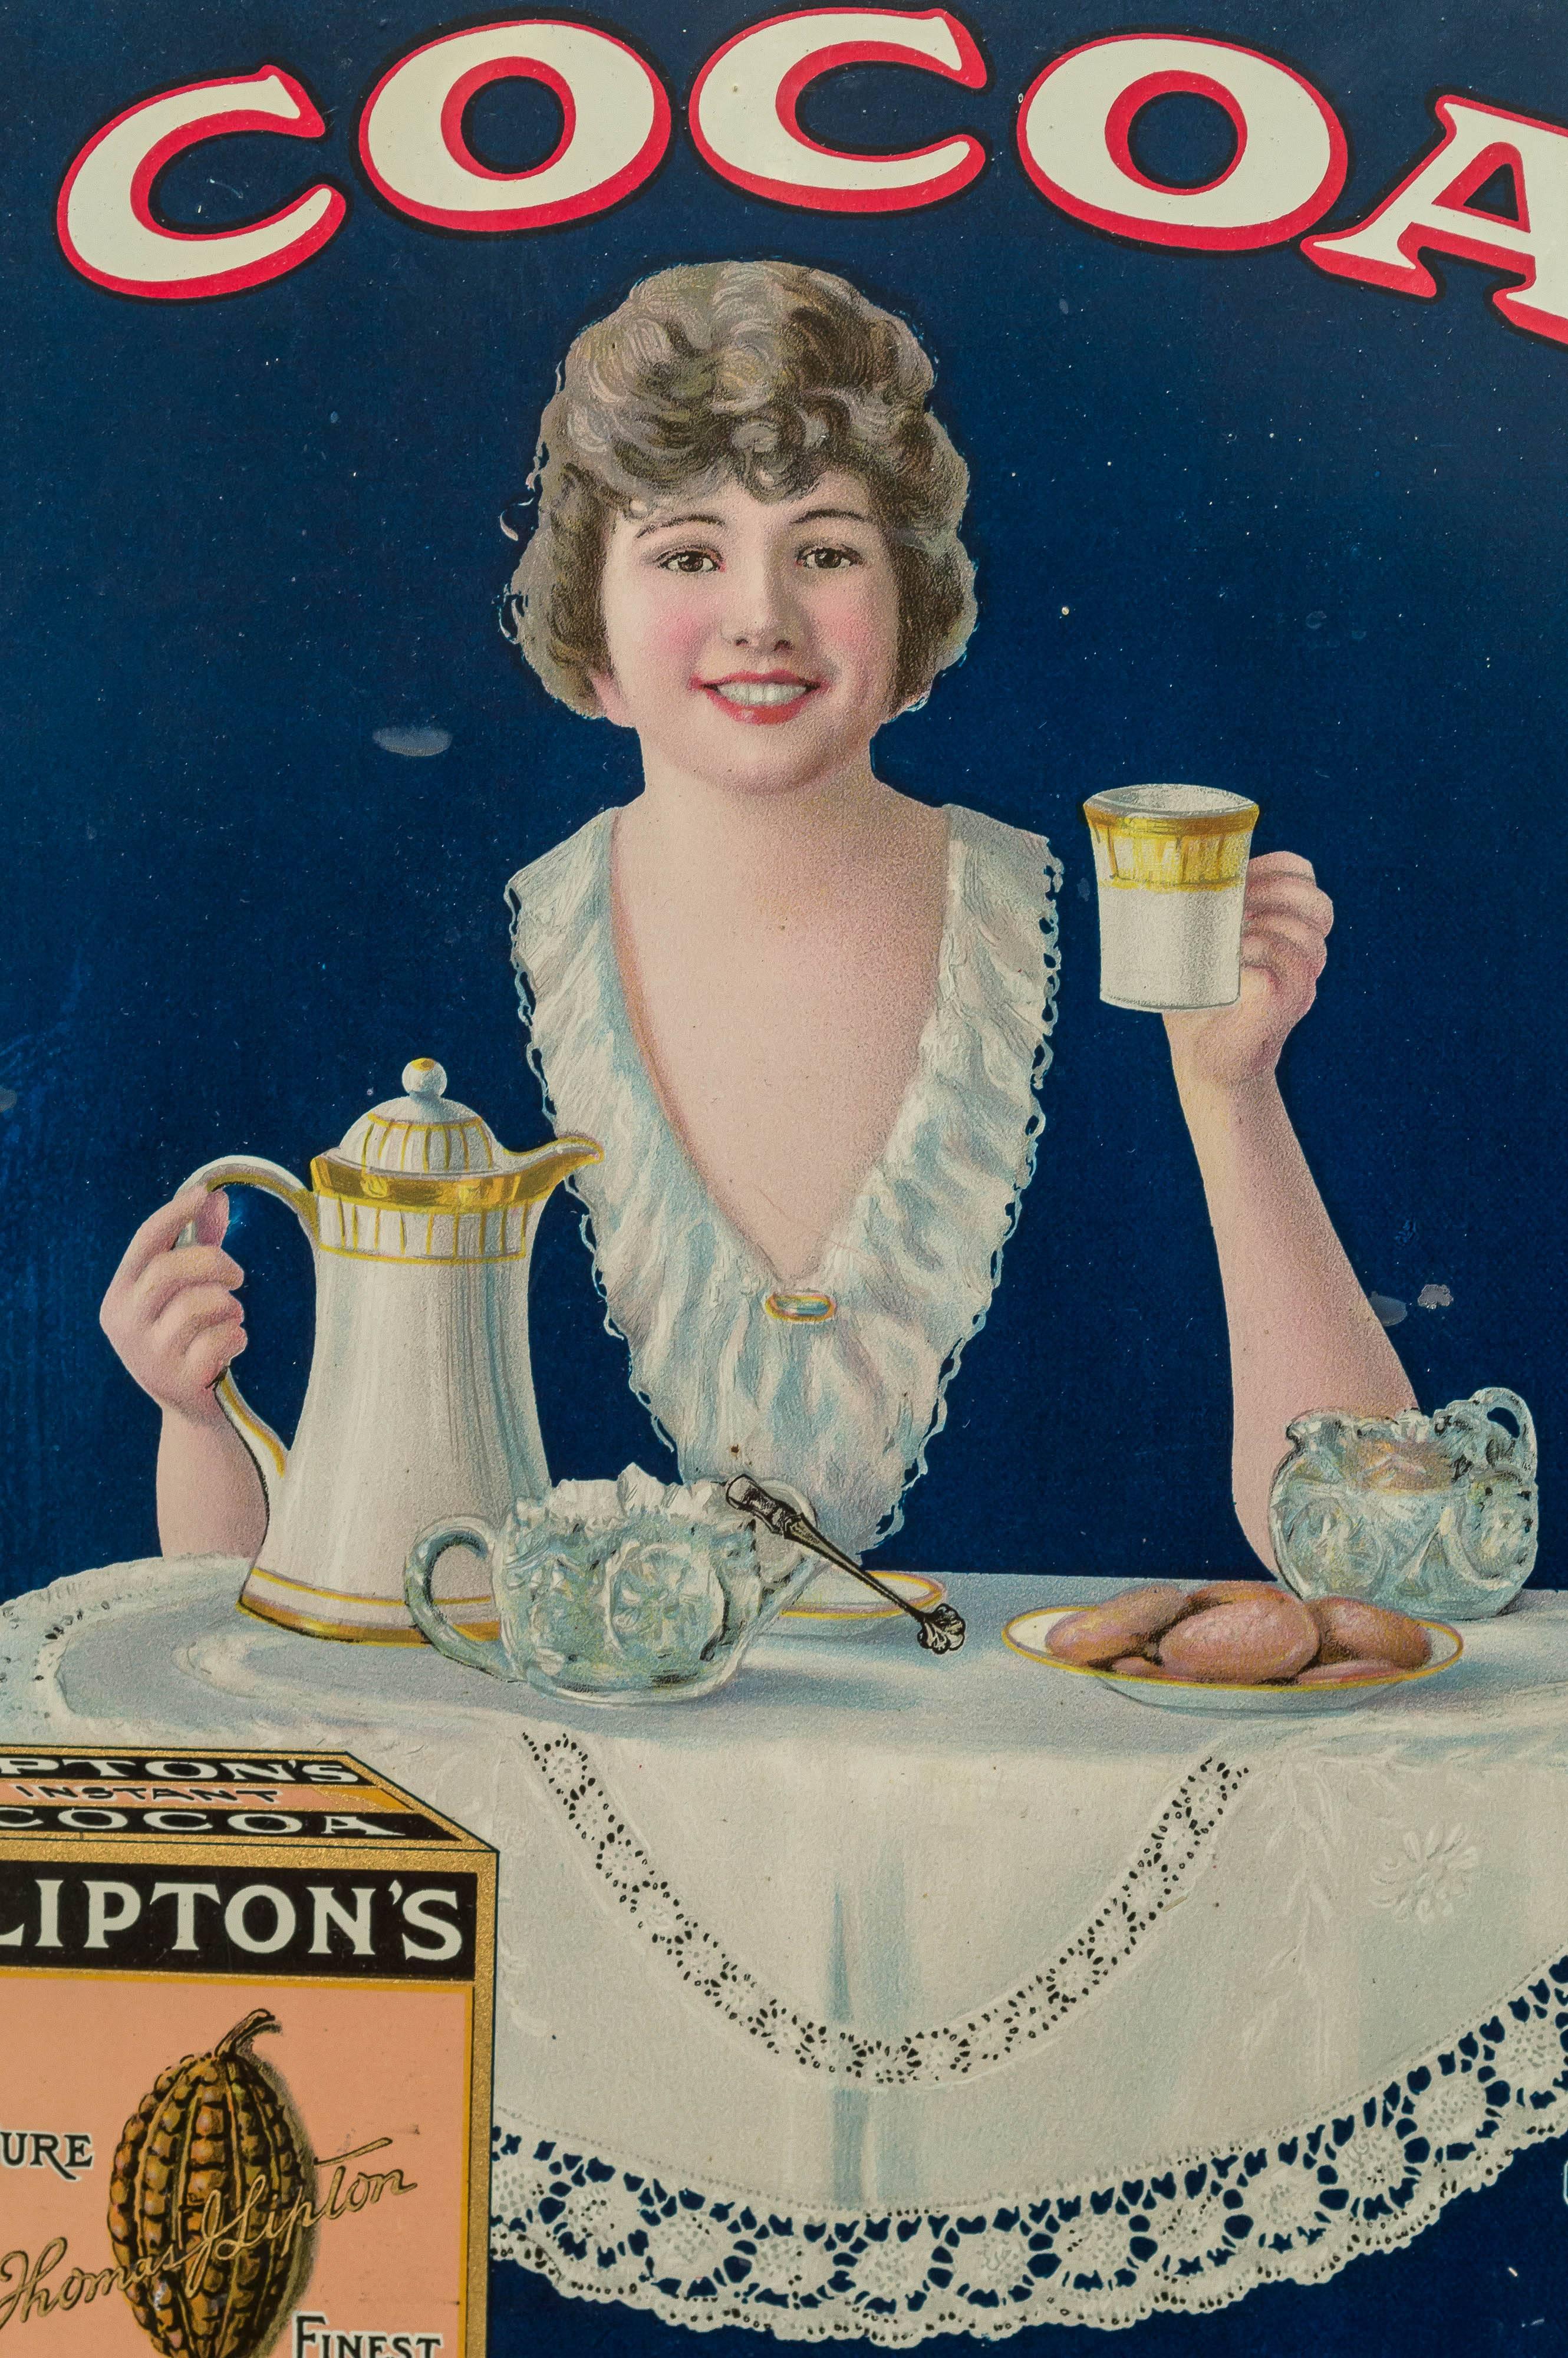 American Tin Advertising Sign for Lipton's Cocoa